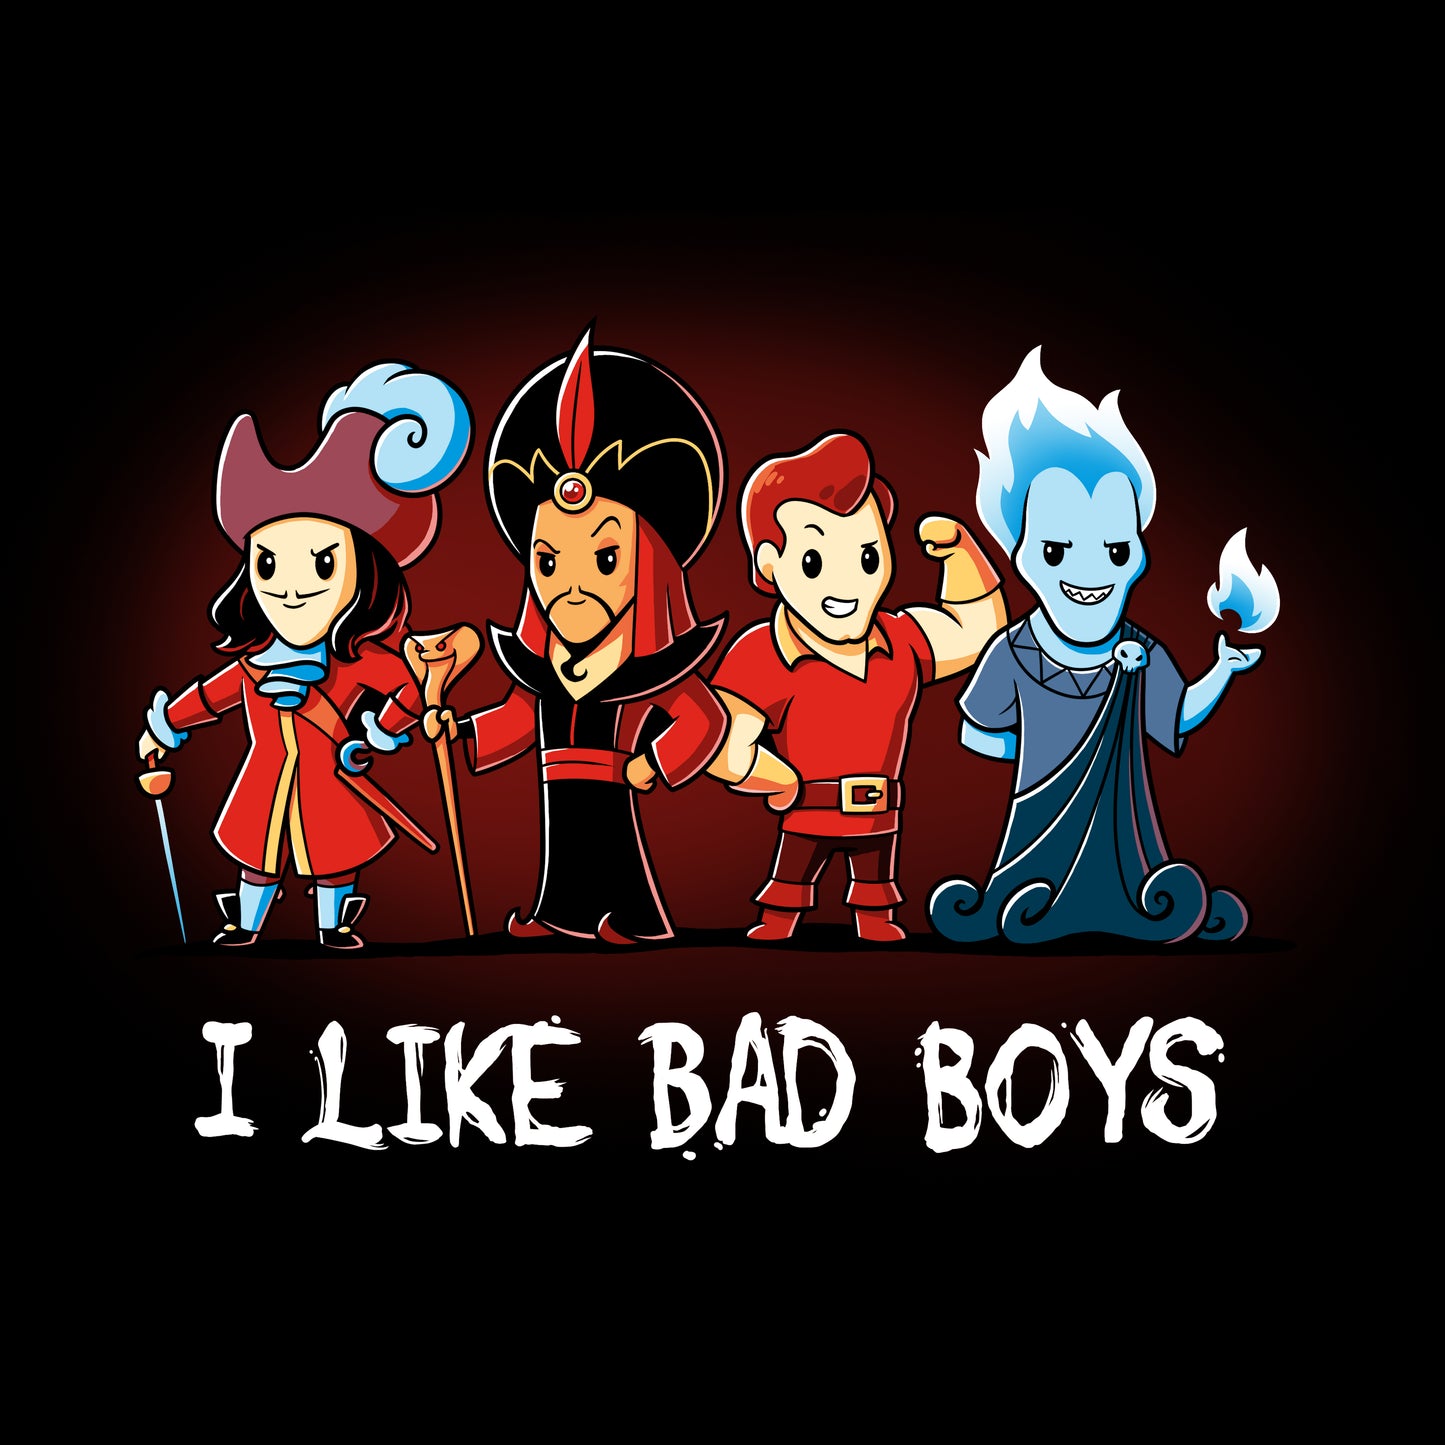 I like Disney "I Like Bad Boys (Villains)" t-shirt.